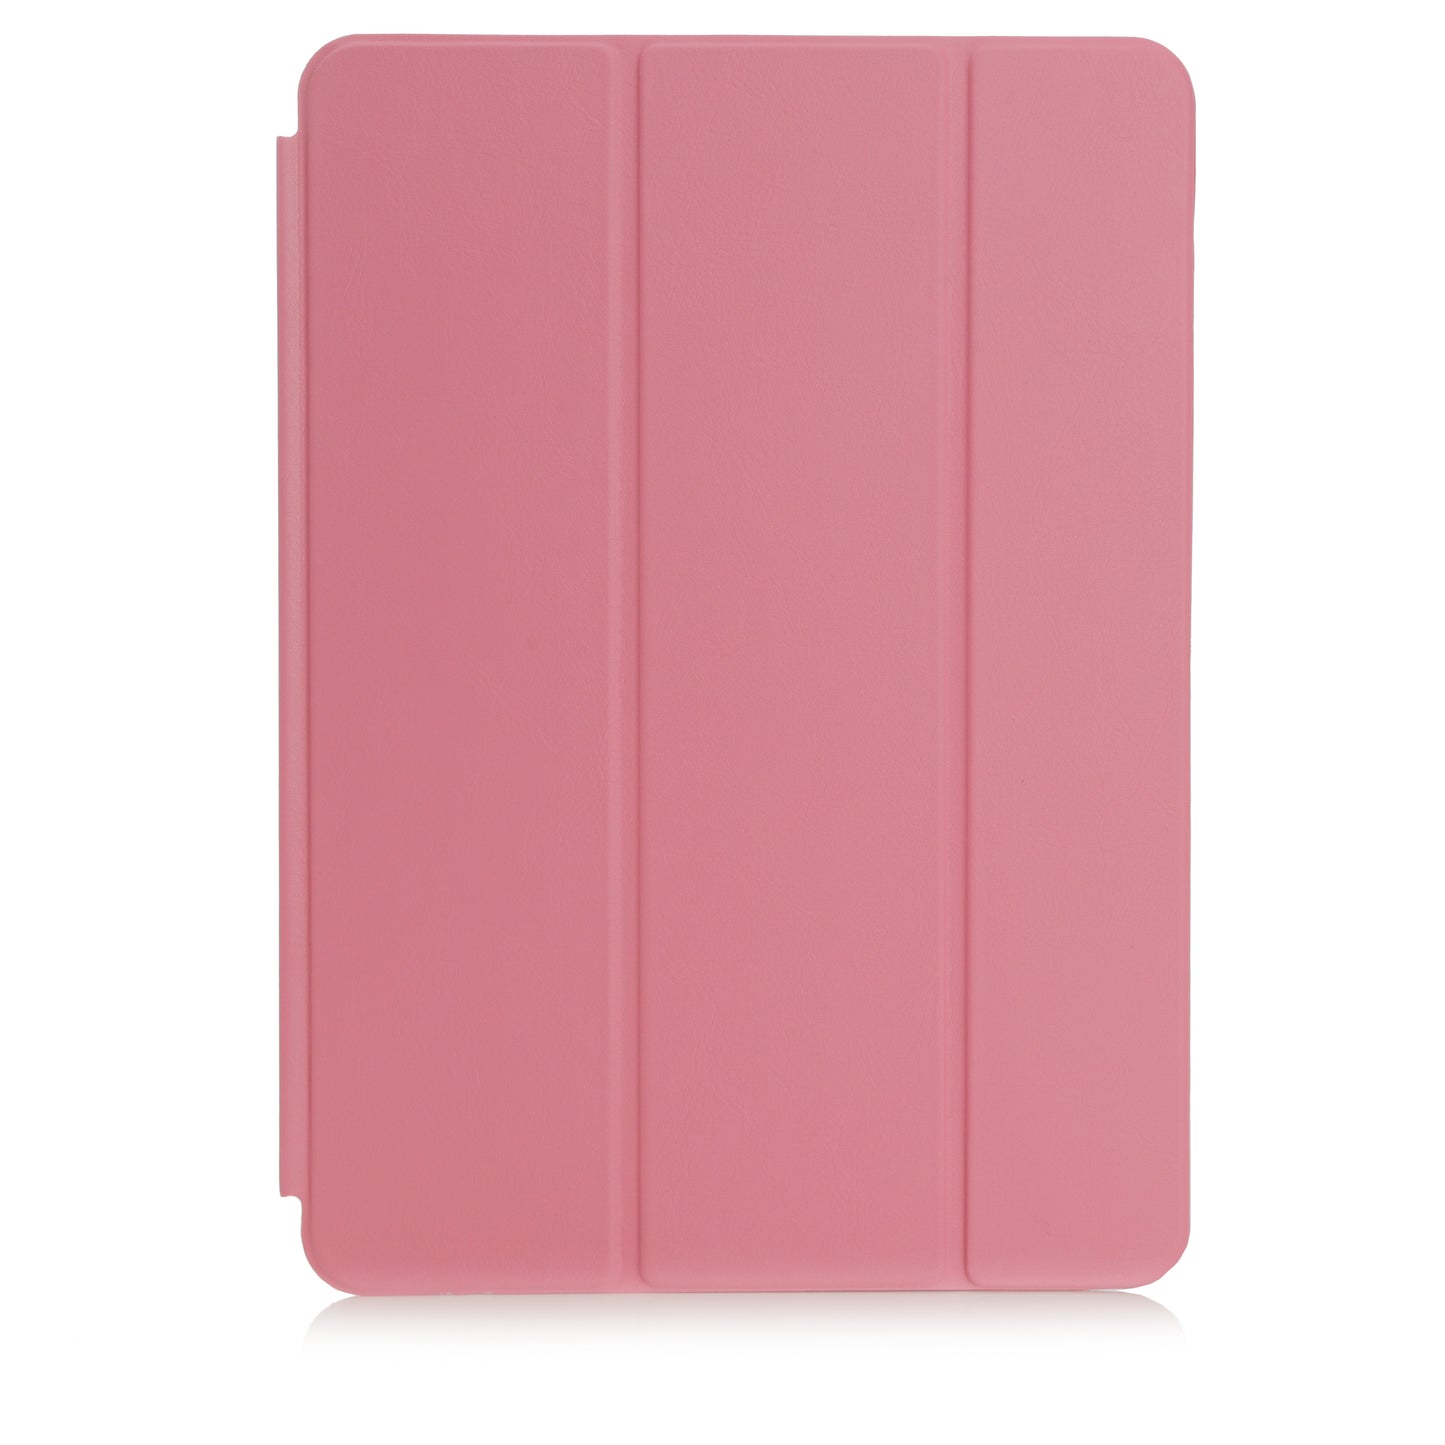 iCEO iPad mini 4 SmartCover Case